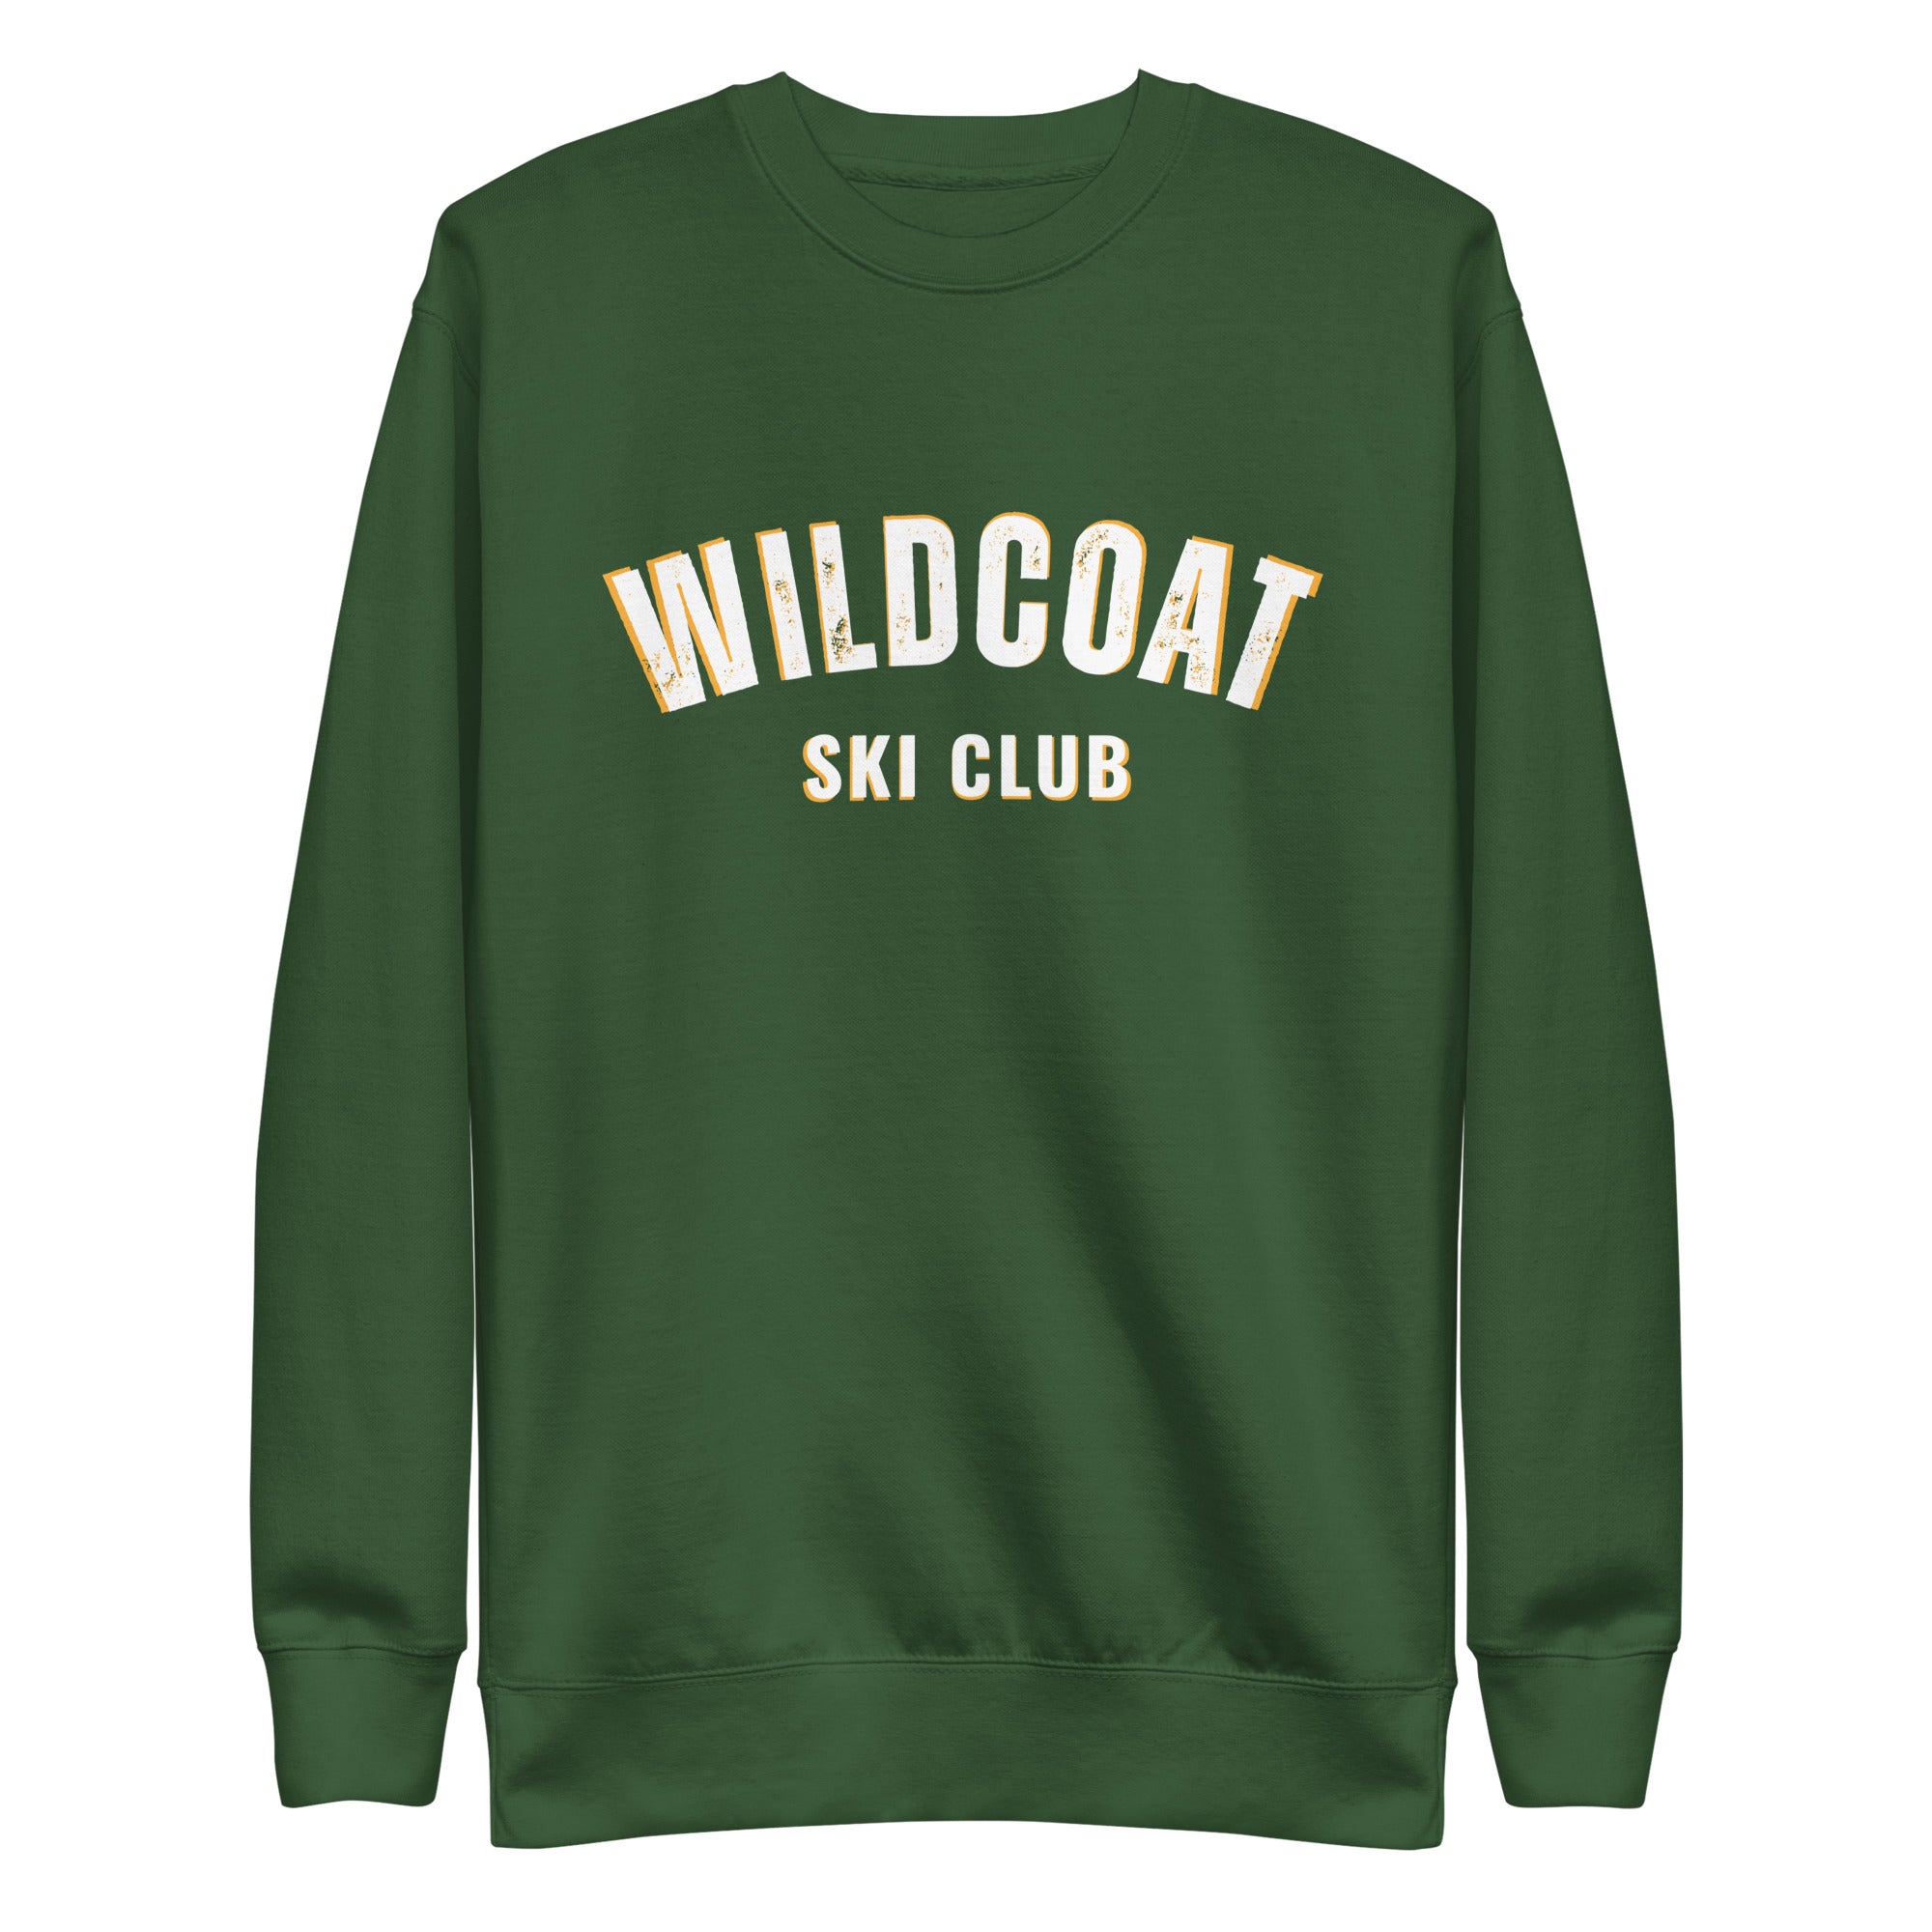 Wildcoat Ski Club Crew Neck Sweatshirt